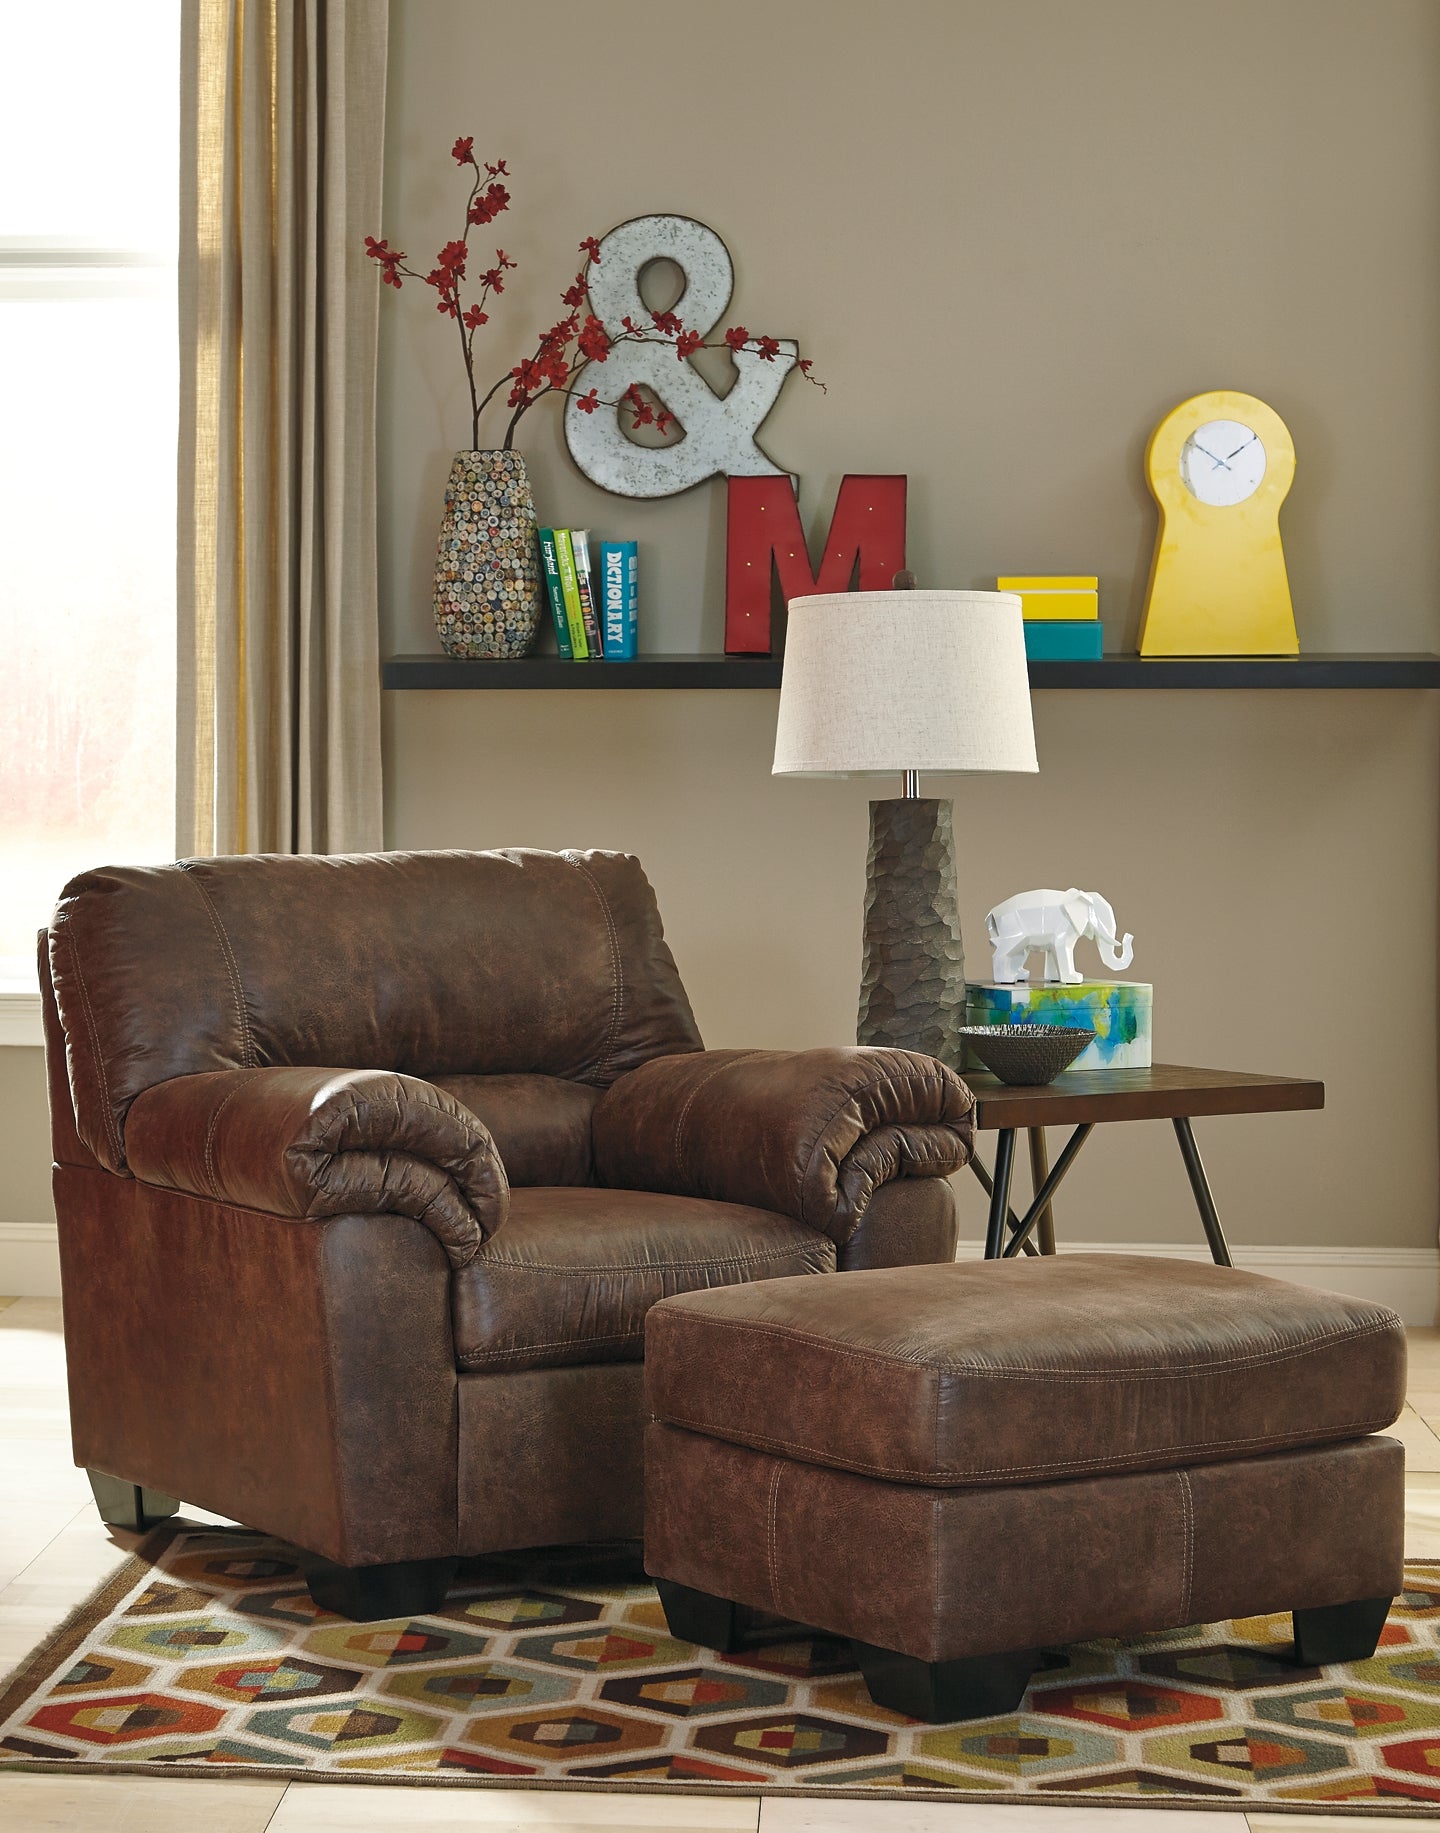 Bladen Sofa, Loveseat, Chair and Ottoman